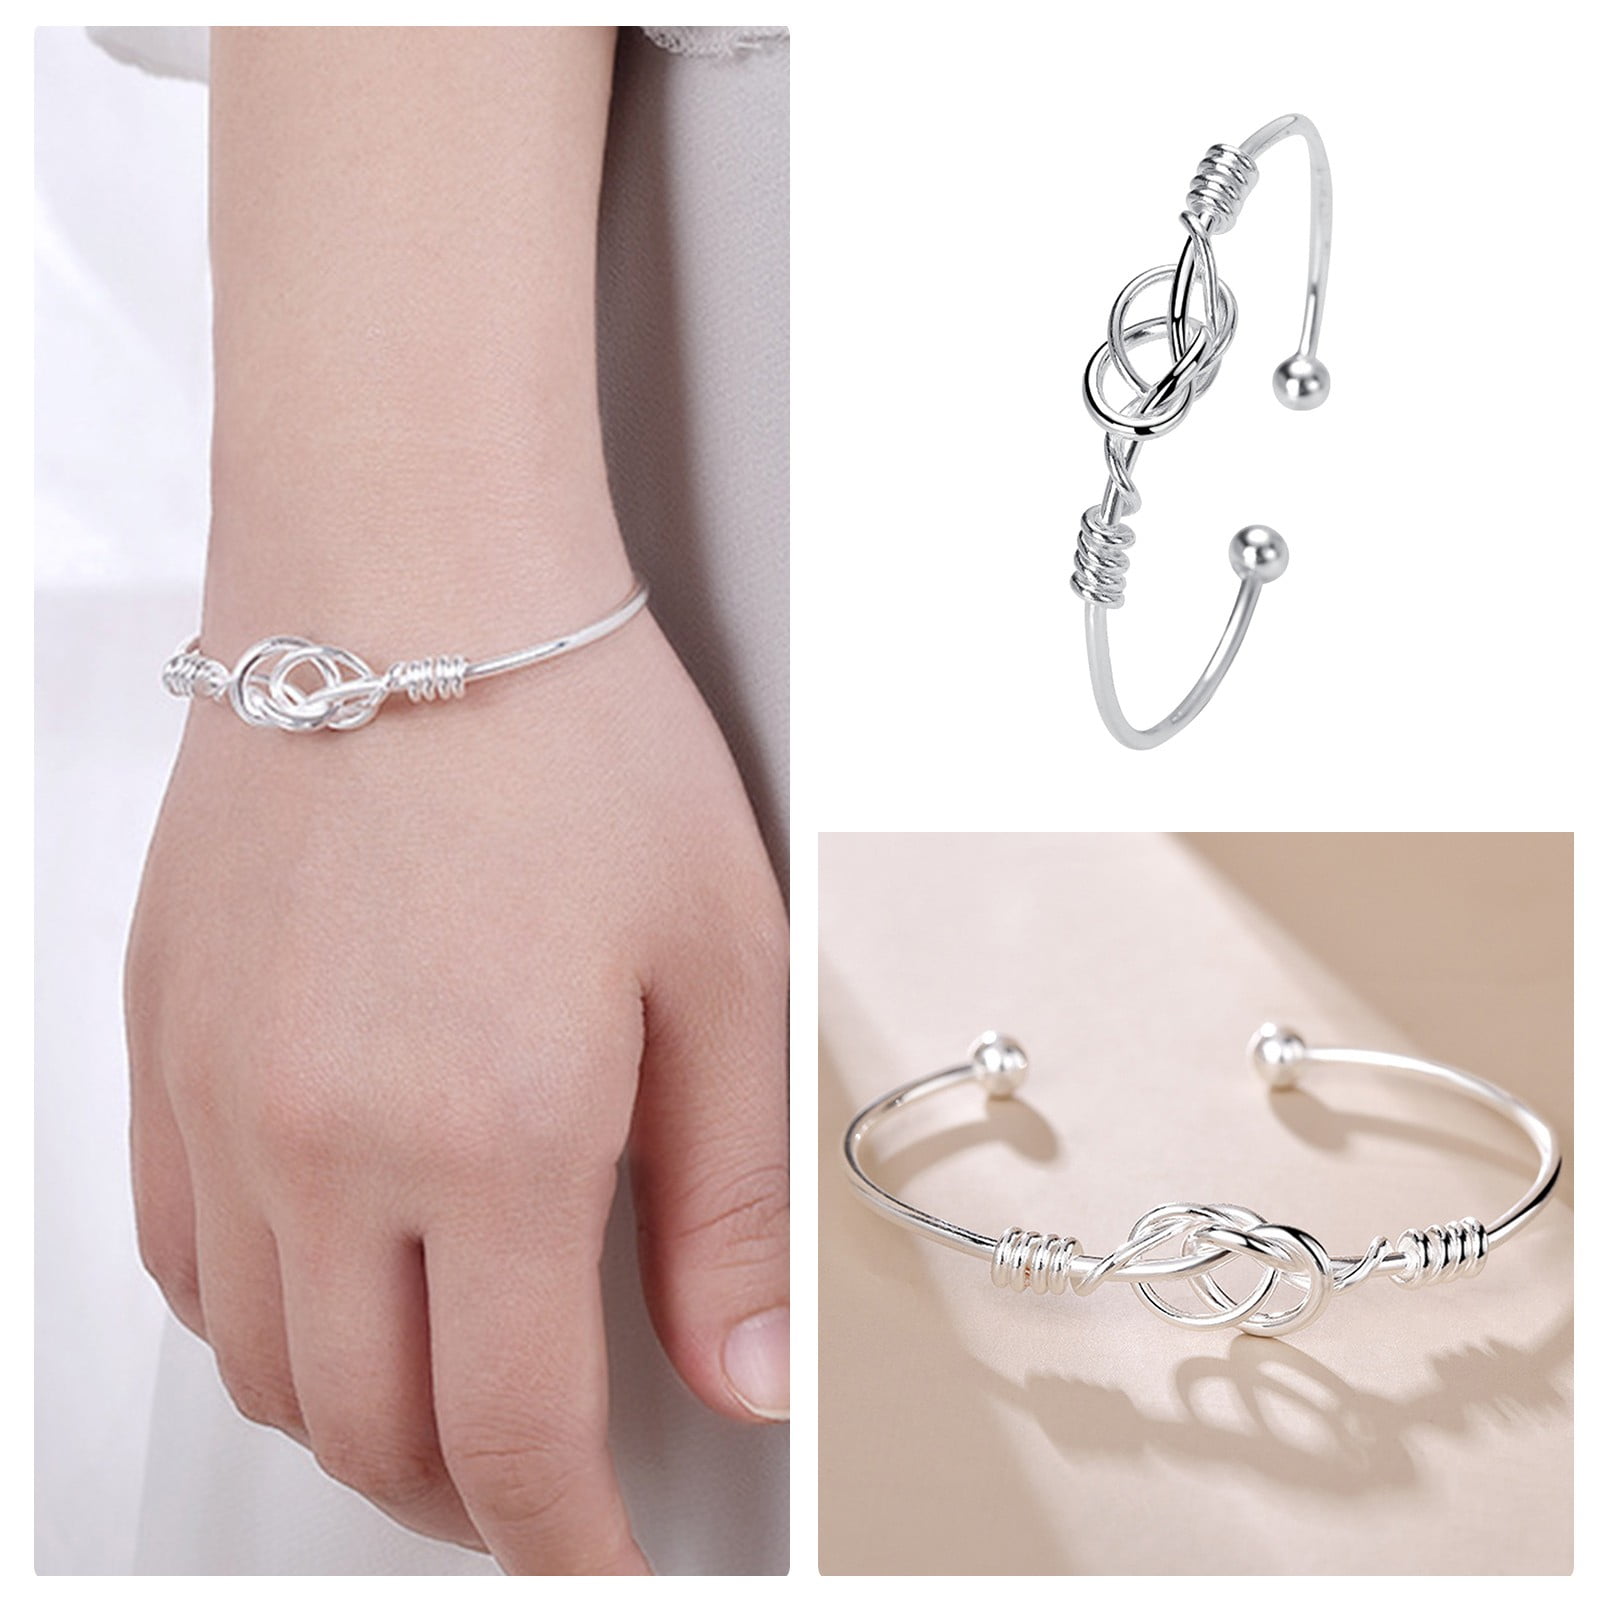 Womens Bracelets Geometric Knot Women Bracelet Cute Design Adjustable Sterling Silver Bracelets For Womens Girls 57363642 5483 477c a84e fce3cbdb1868.10e8d8c05e94cbed9eefa9d800f10d5c